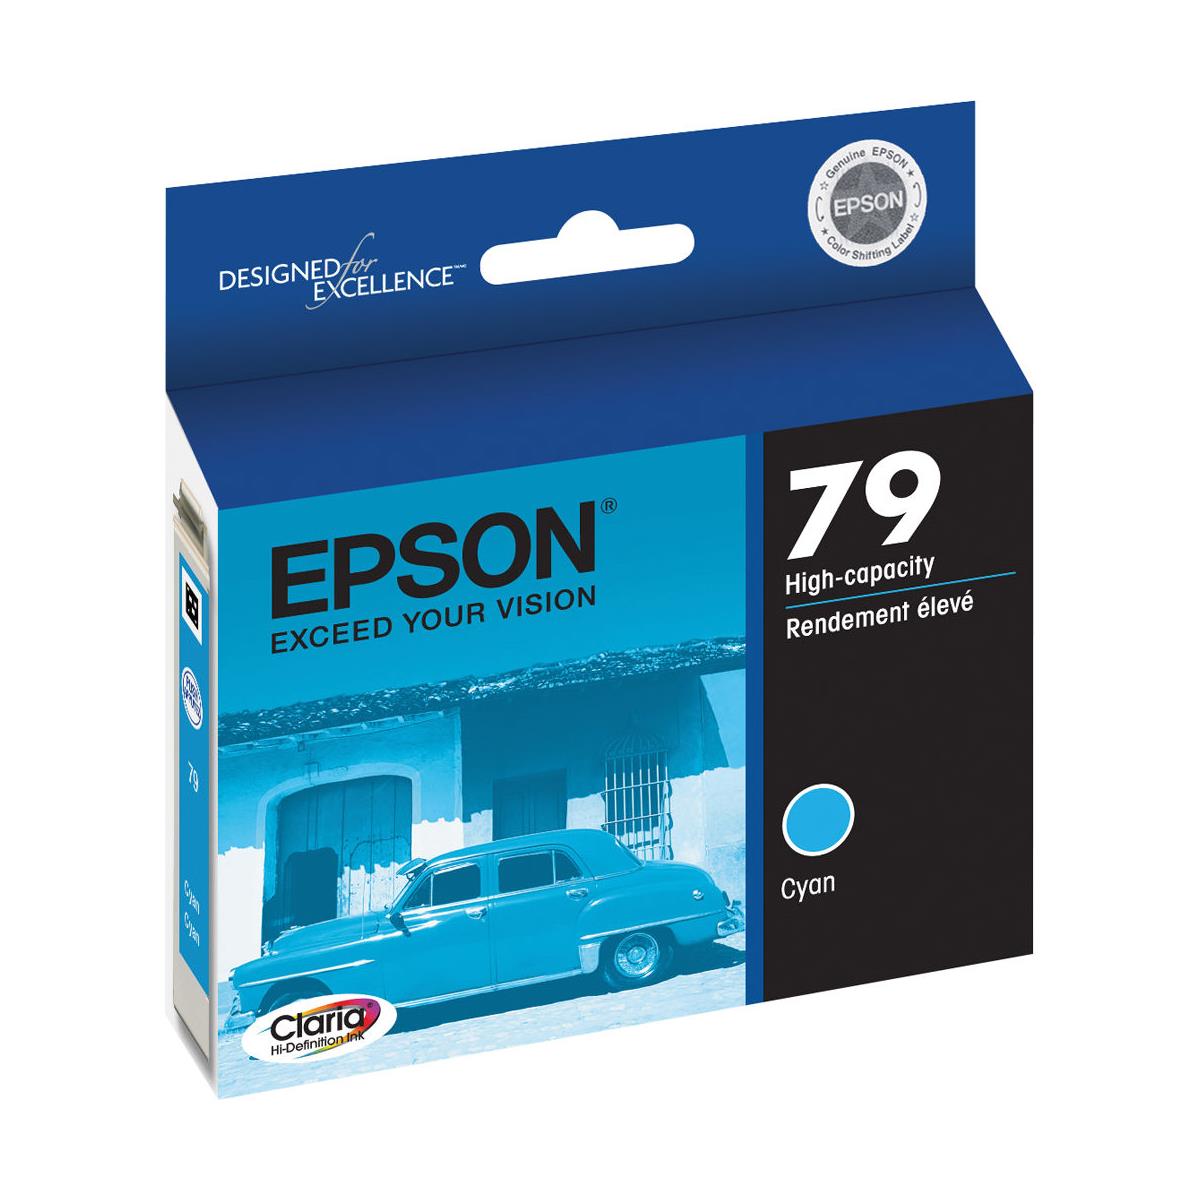 Epson T079220 #79 Cartridge for Stylus 1400, Cyan <b> #79 Cyan Ink Cartridge for the Stylus Wide Format 1400 Photo Printer </b>